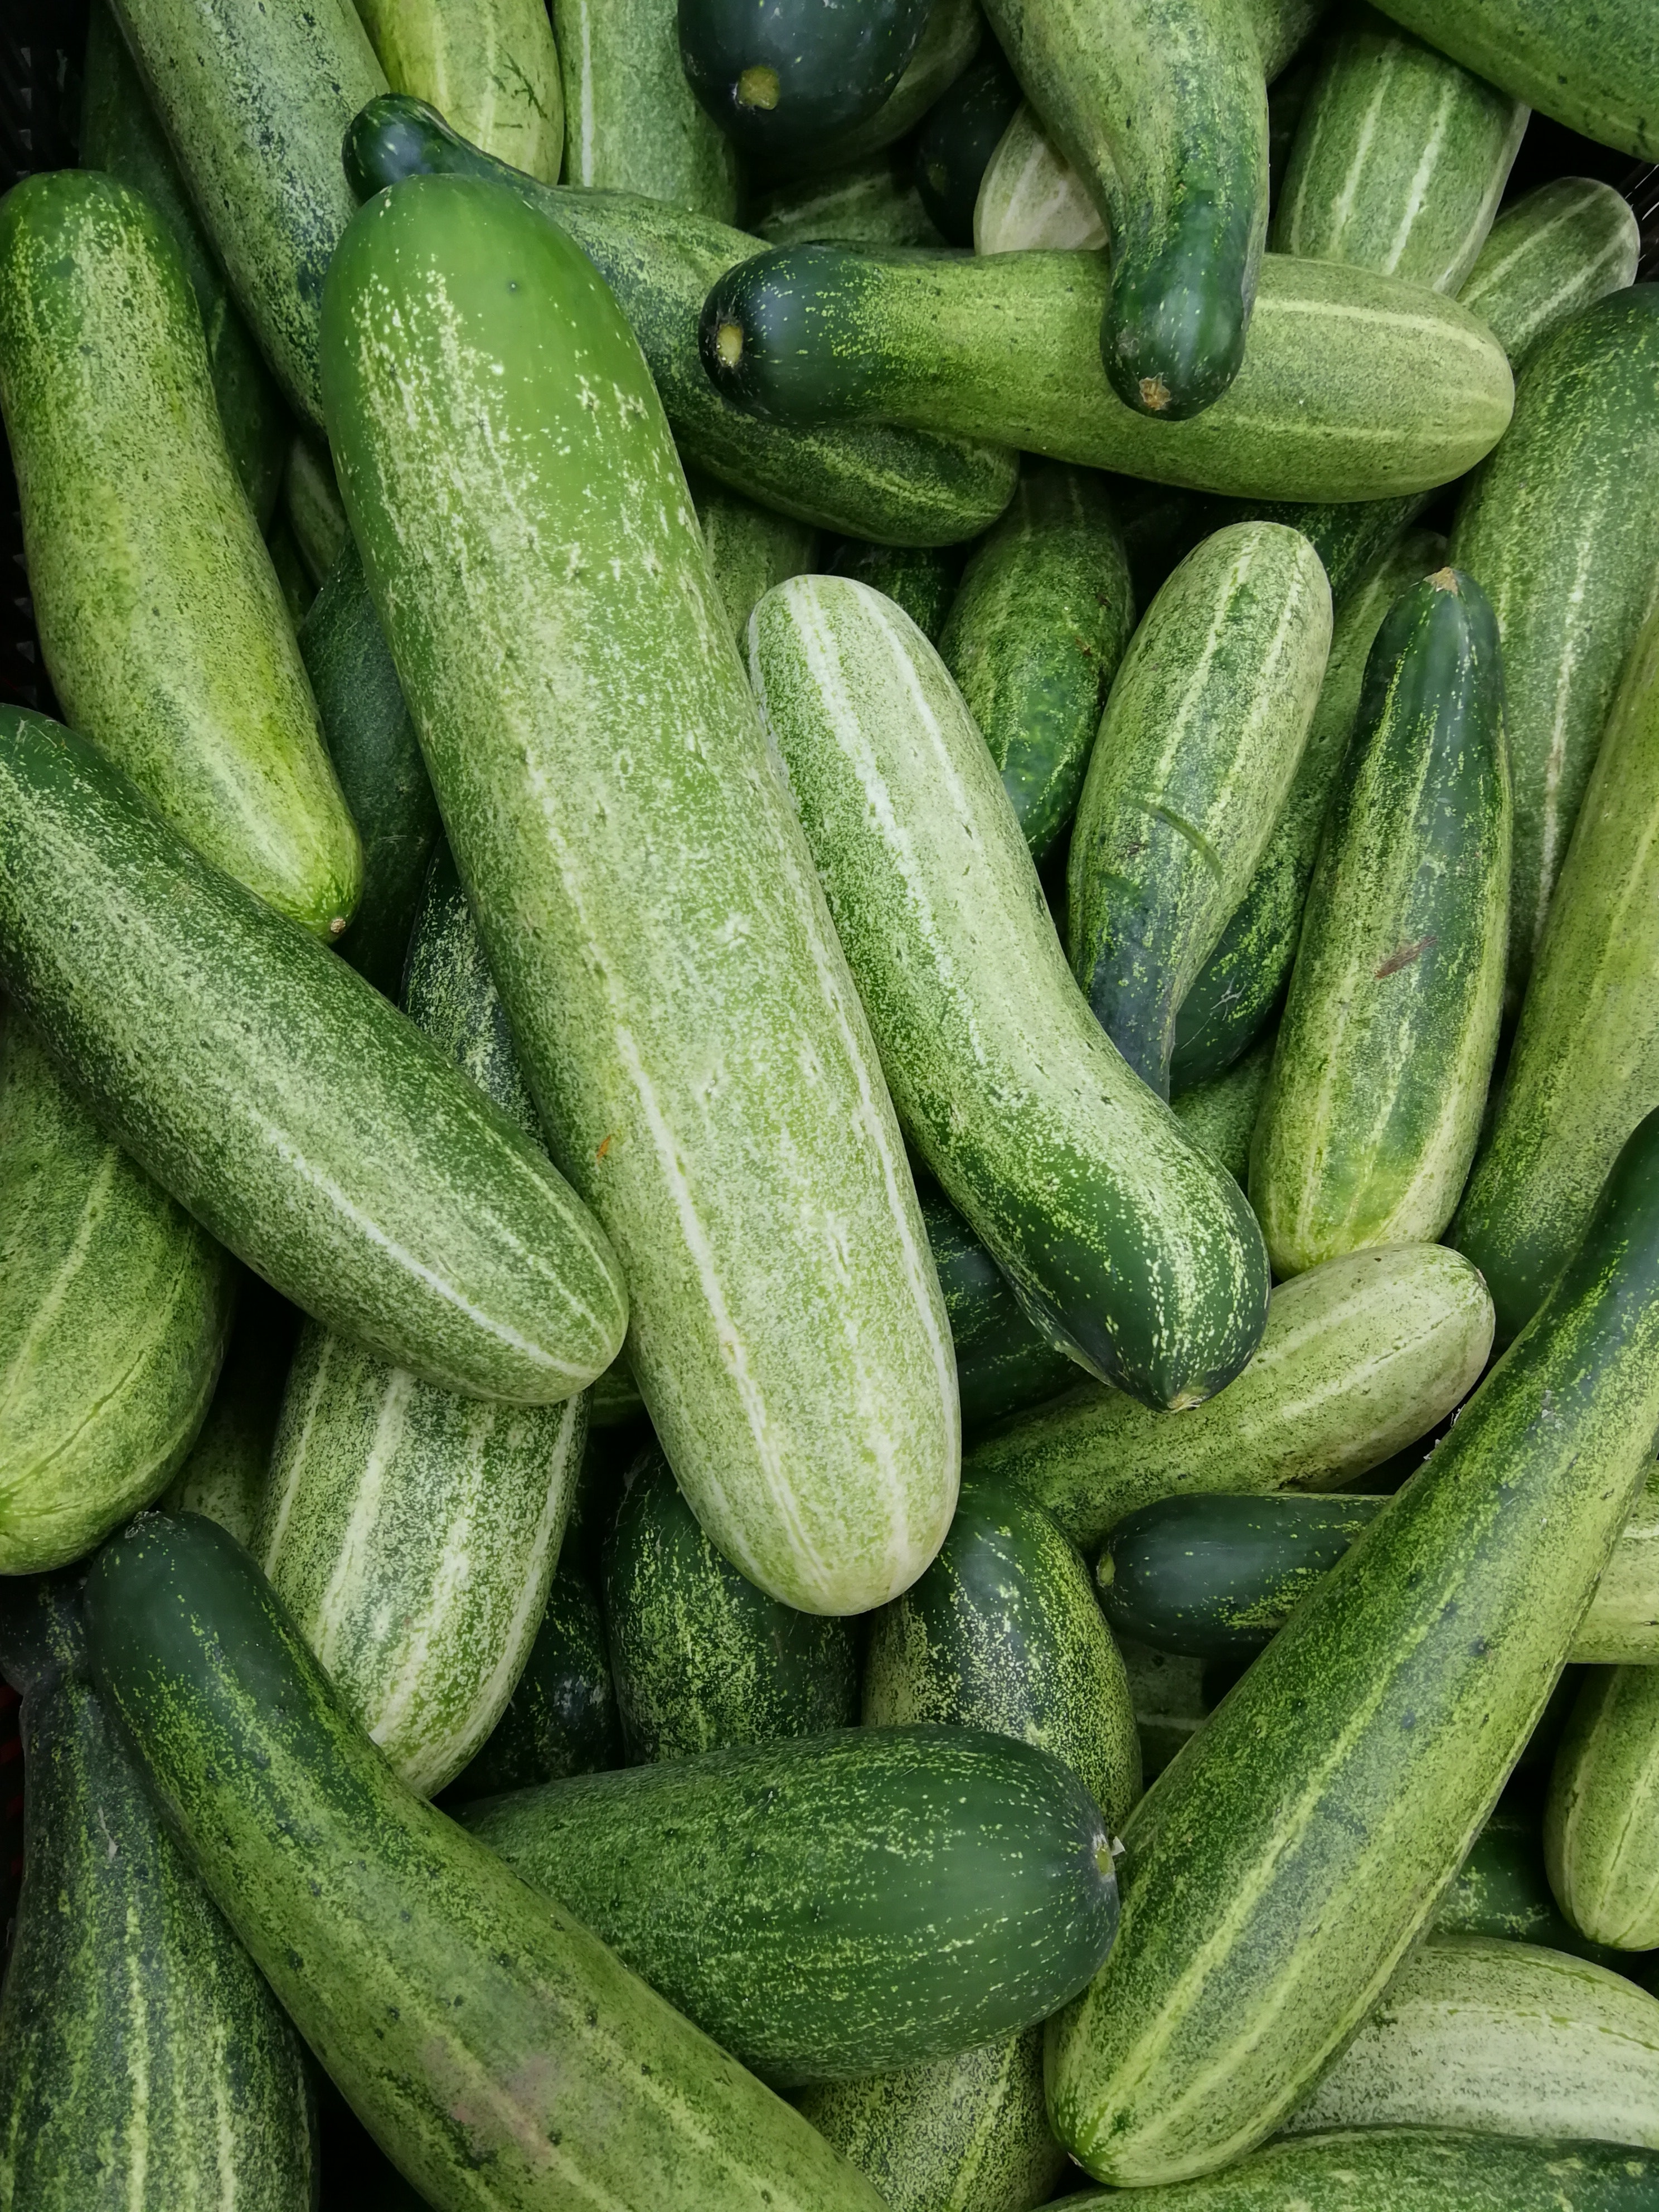 Lots of green cucumbers